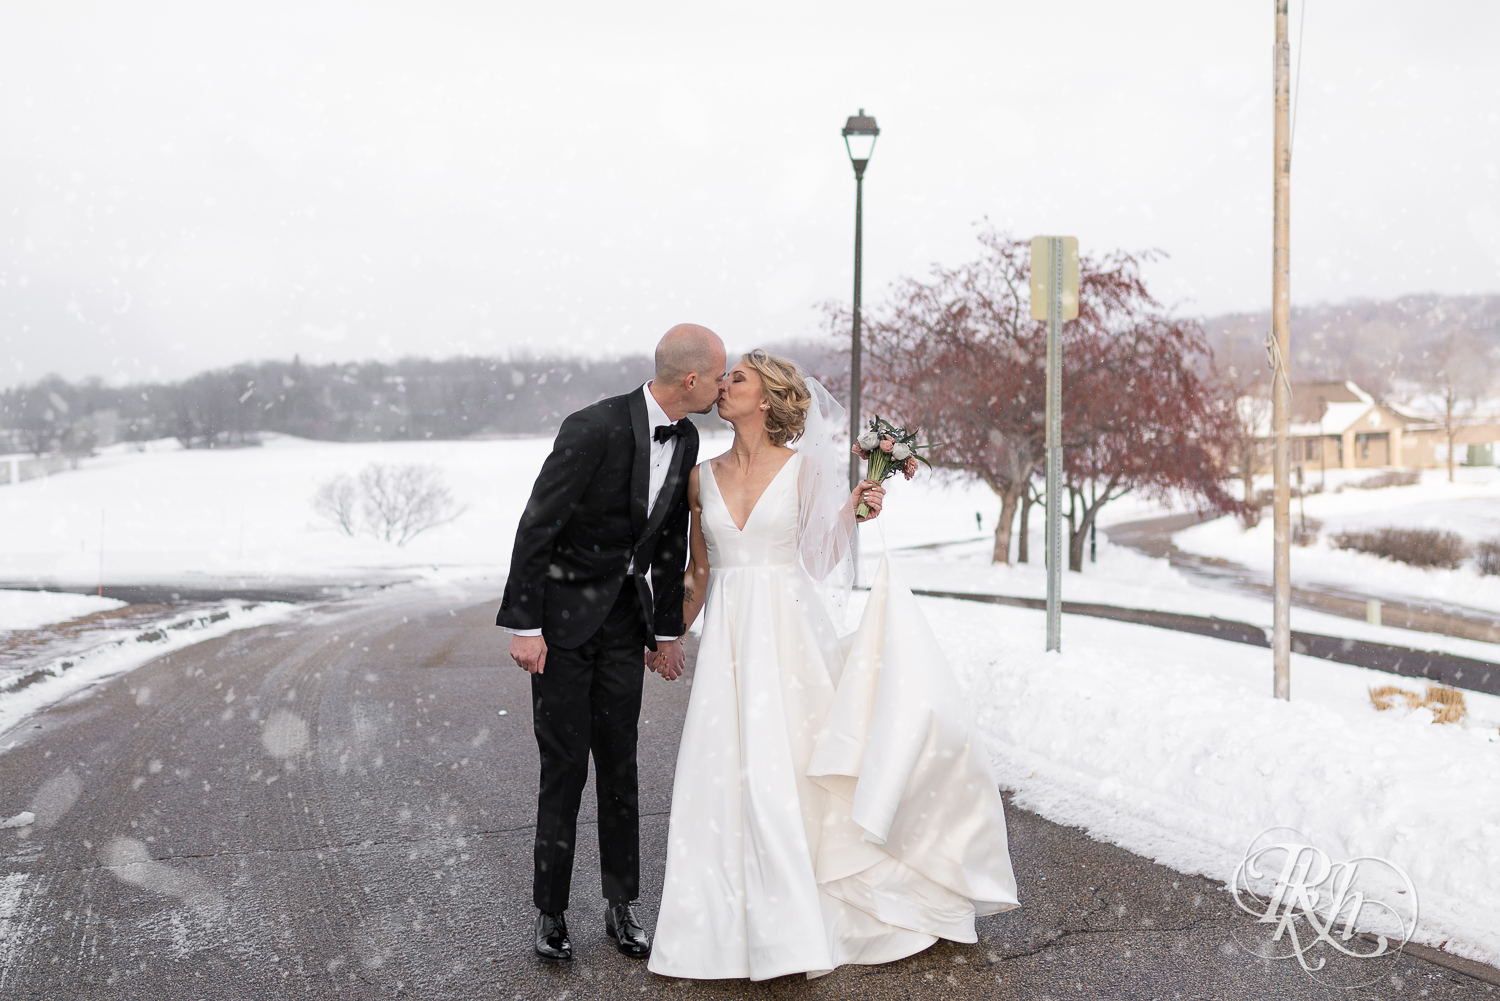 Bride and groom walking in falling snow at Braemar Golf Course in Edina, Minnesota.